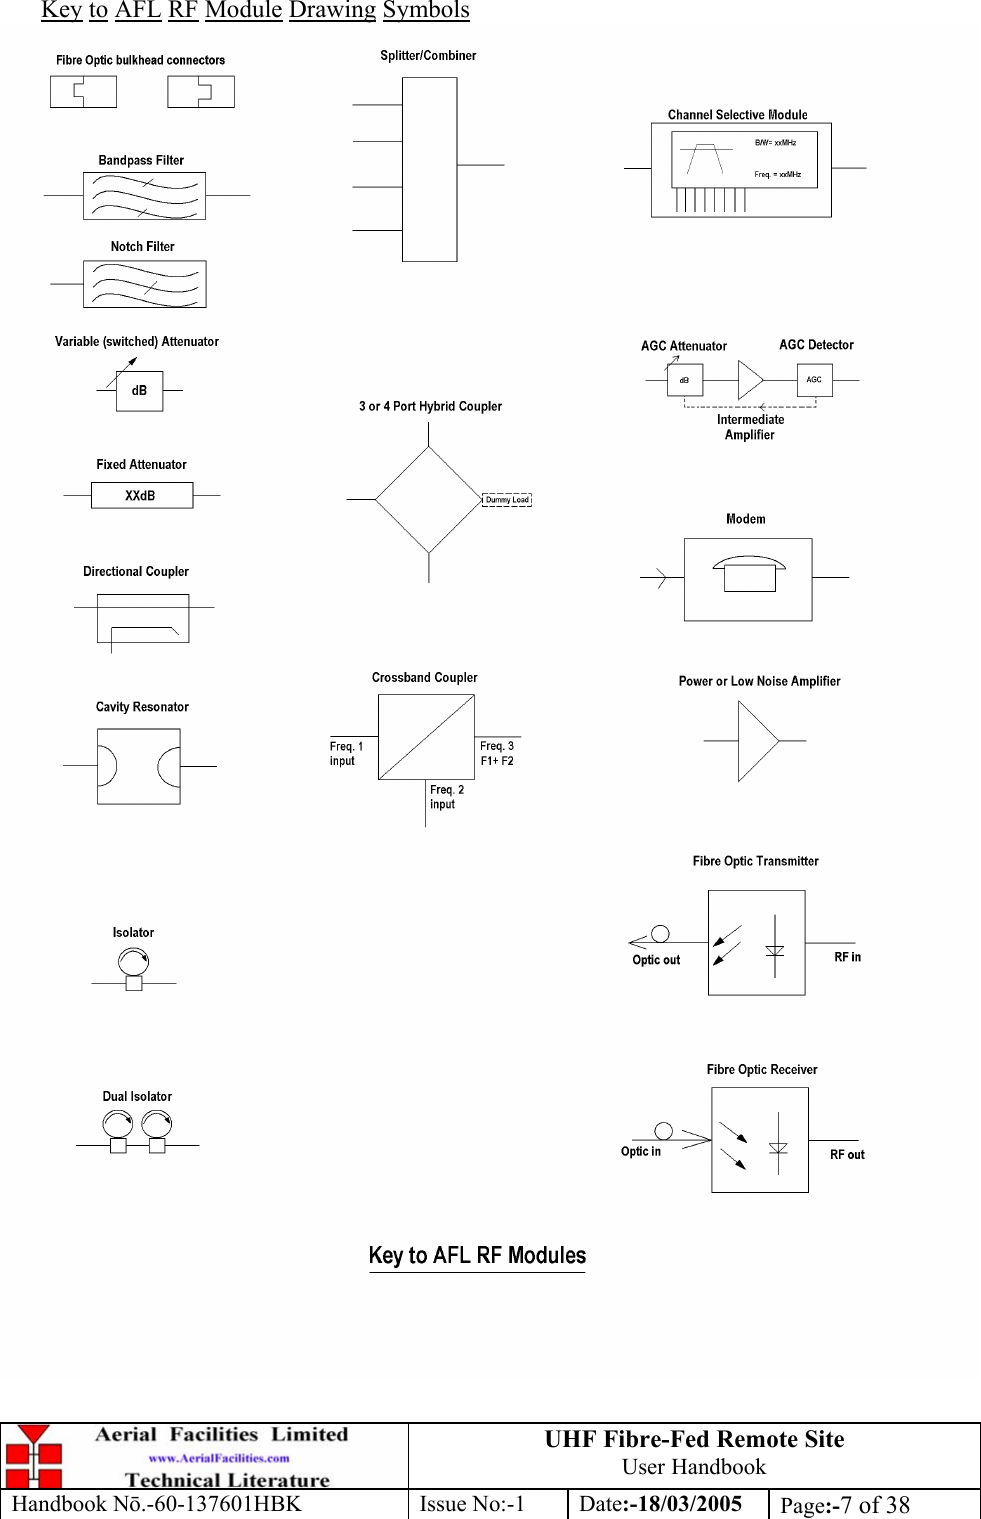 UHF Fibre-Fed Remote Site User Handbook Handbook N.-60-137601HBK Issue No:-1 Date:-18/03/2005  Page:-7 of 38  Key to AFL RF Module Drawing Symbols   